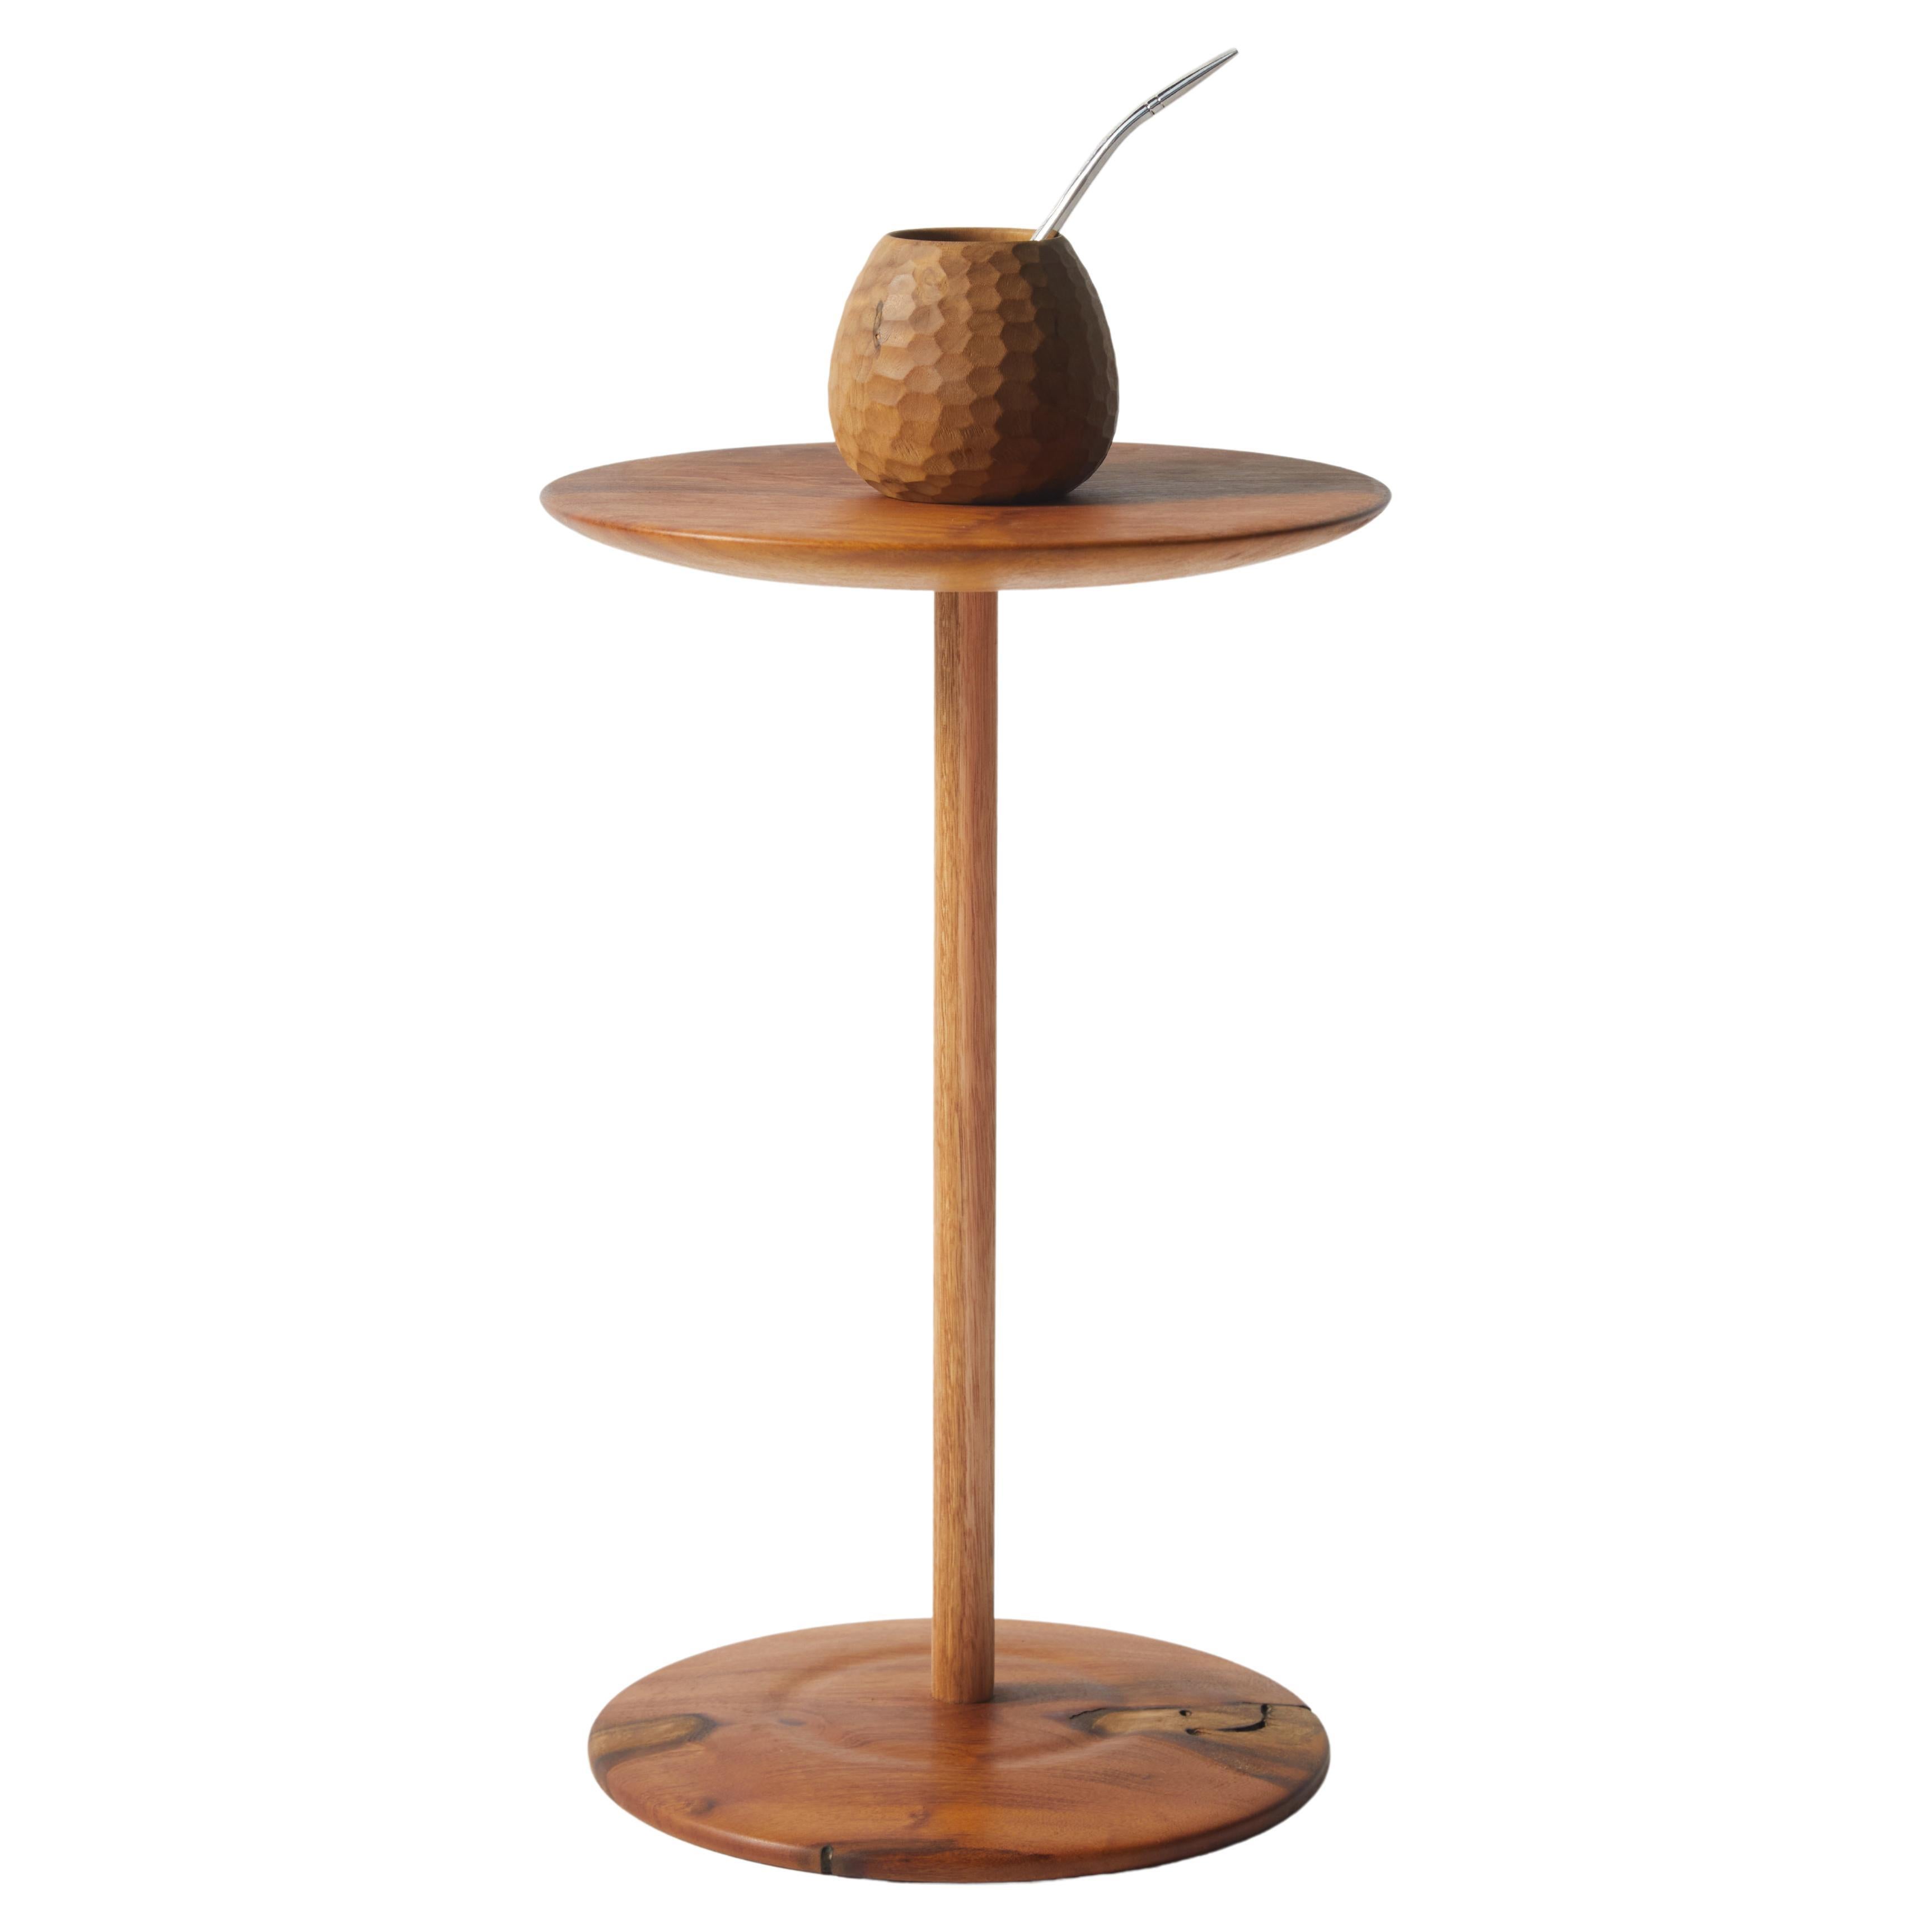 'Cerchi' Side Table - André  Bianco- Brazilian Design 